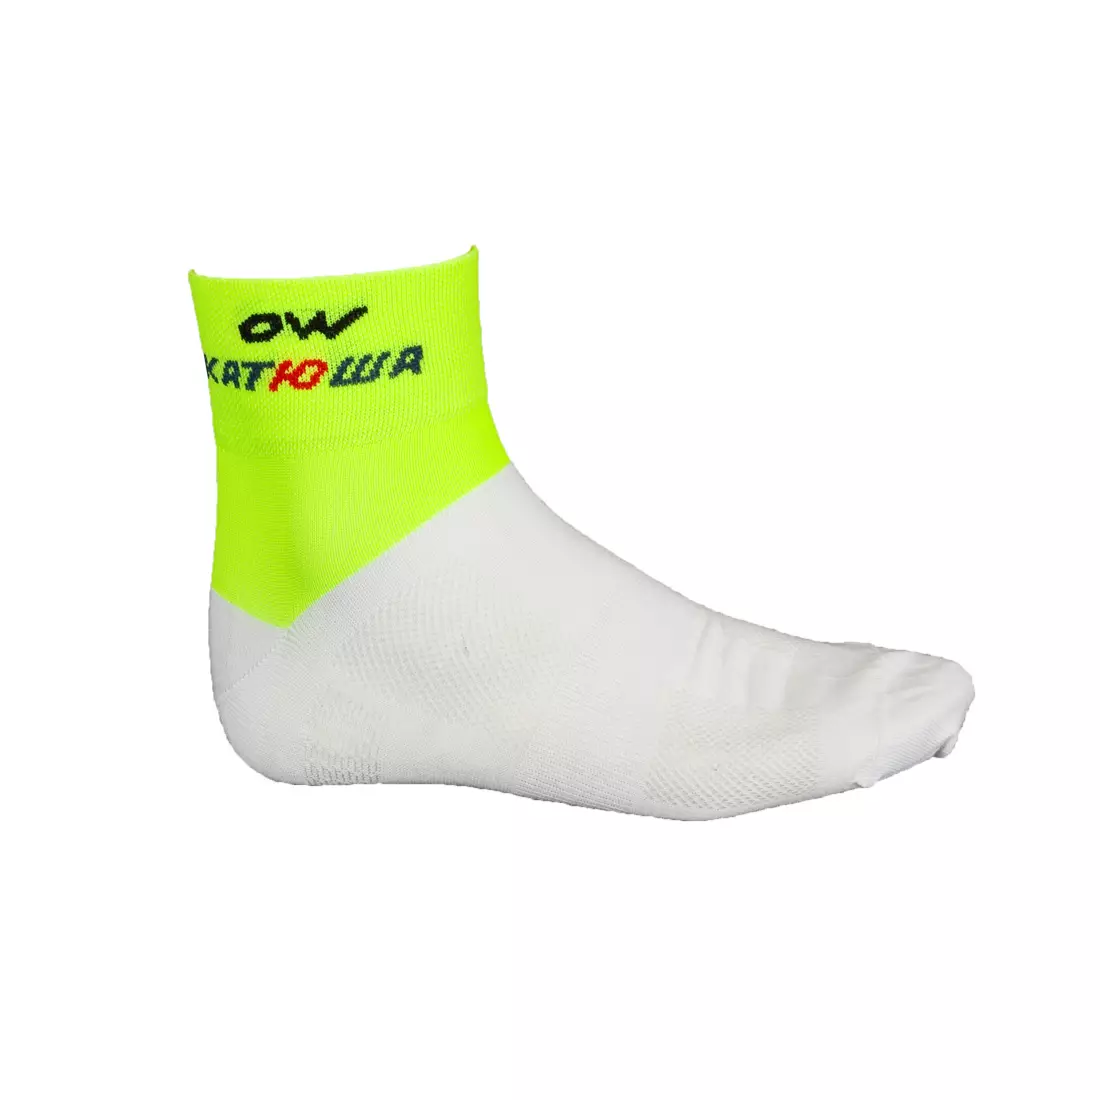 KATUSHA 2015 cycling socks